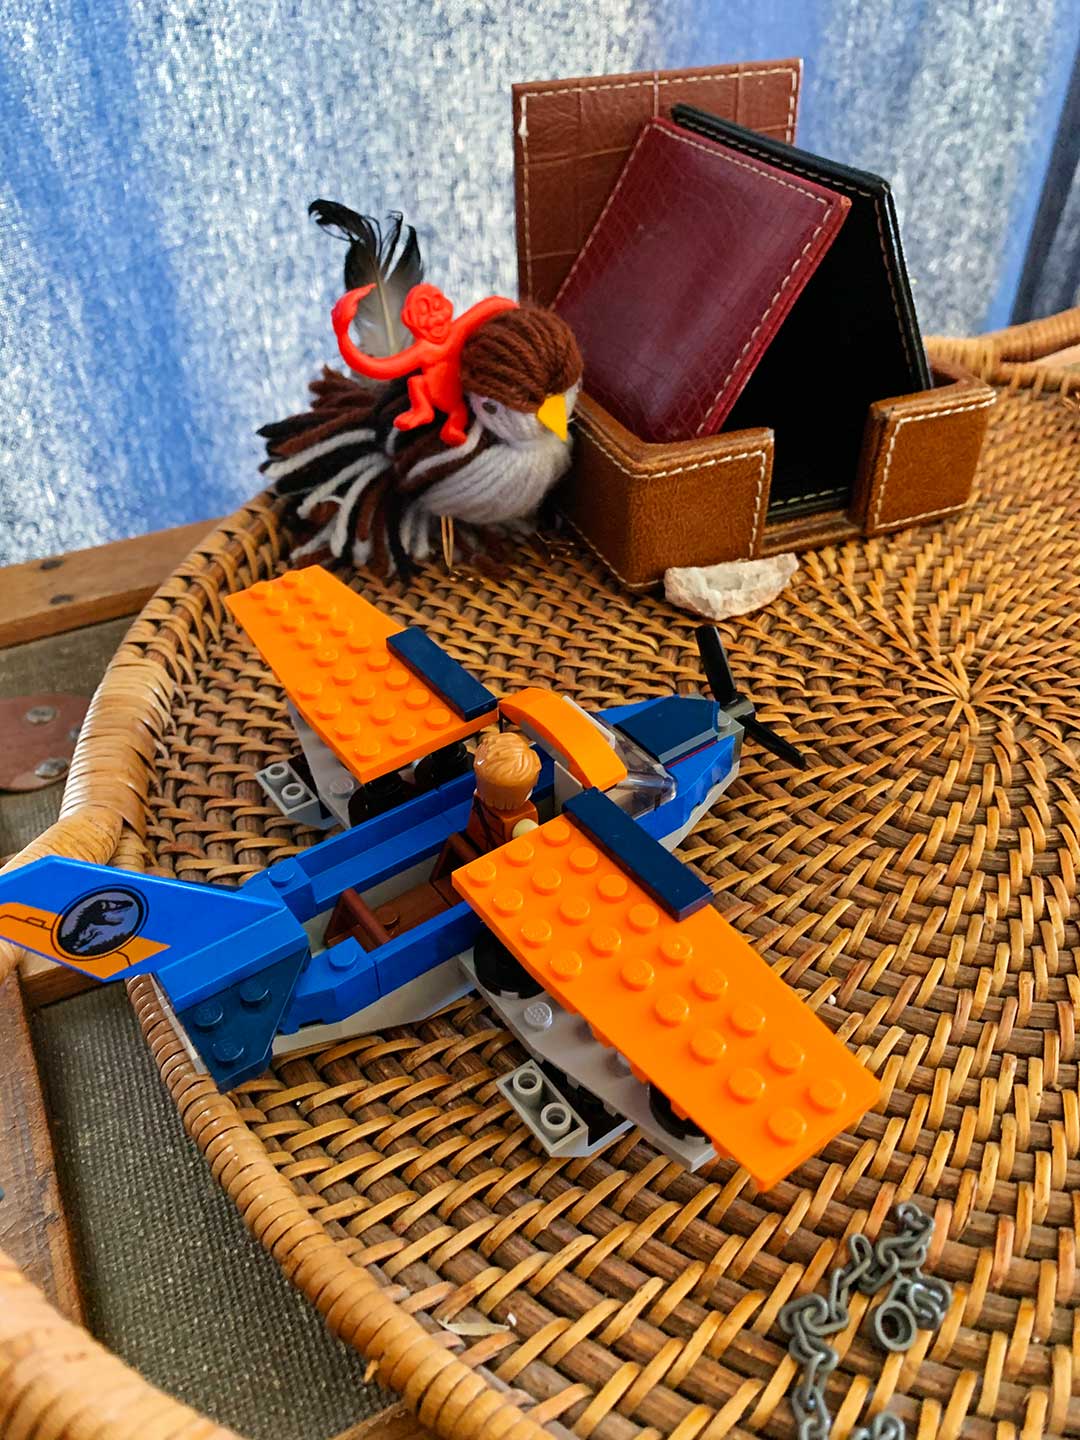 A lego airplane, a plastic monkey, and a yarn bird sitting on a side table.